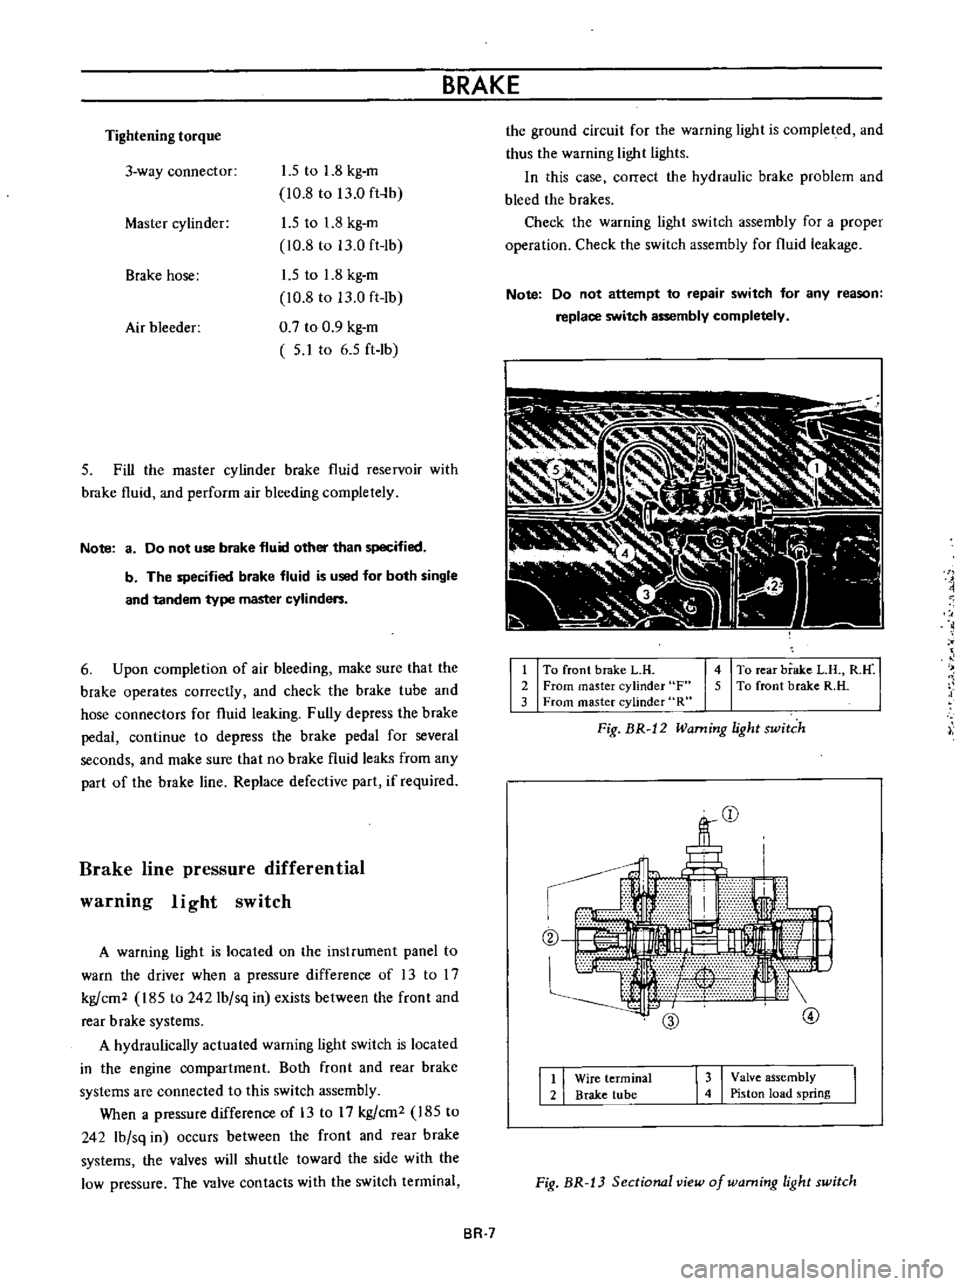 DATSUN B110 1973  Service Repair Manual 
Tightening 
torque

3

way 
connector 
1 
5

to 
1 
8

kg 
m

10
8 
to 
13 
0 
ft
lh

1
5 
to 
1 
8

kg 
m

10

8 
to 
13

0 
ft

lh

1
5 
to 
1 
8

kg 
m

10

8 
to 
13

0 
ft

lb

0

7 
to 
0 
9

k